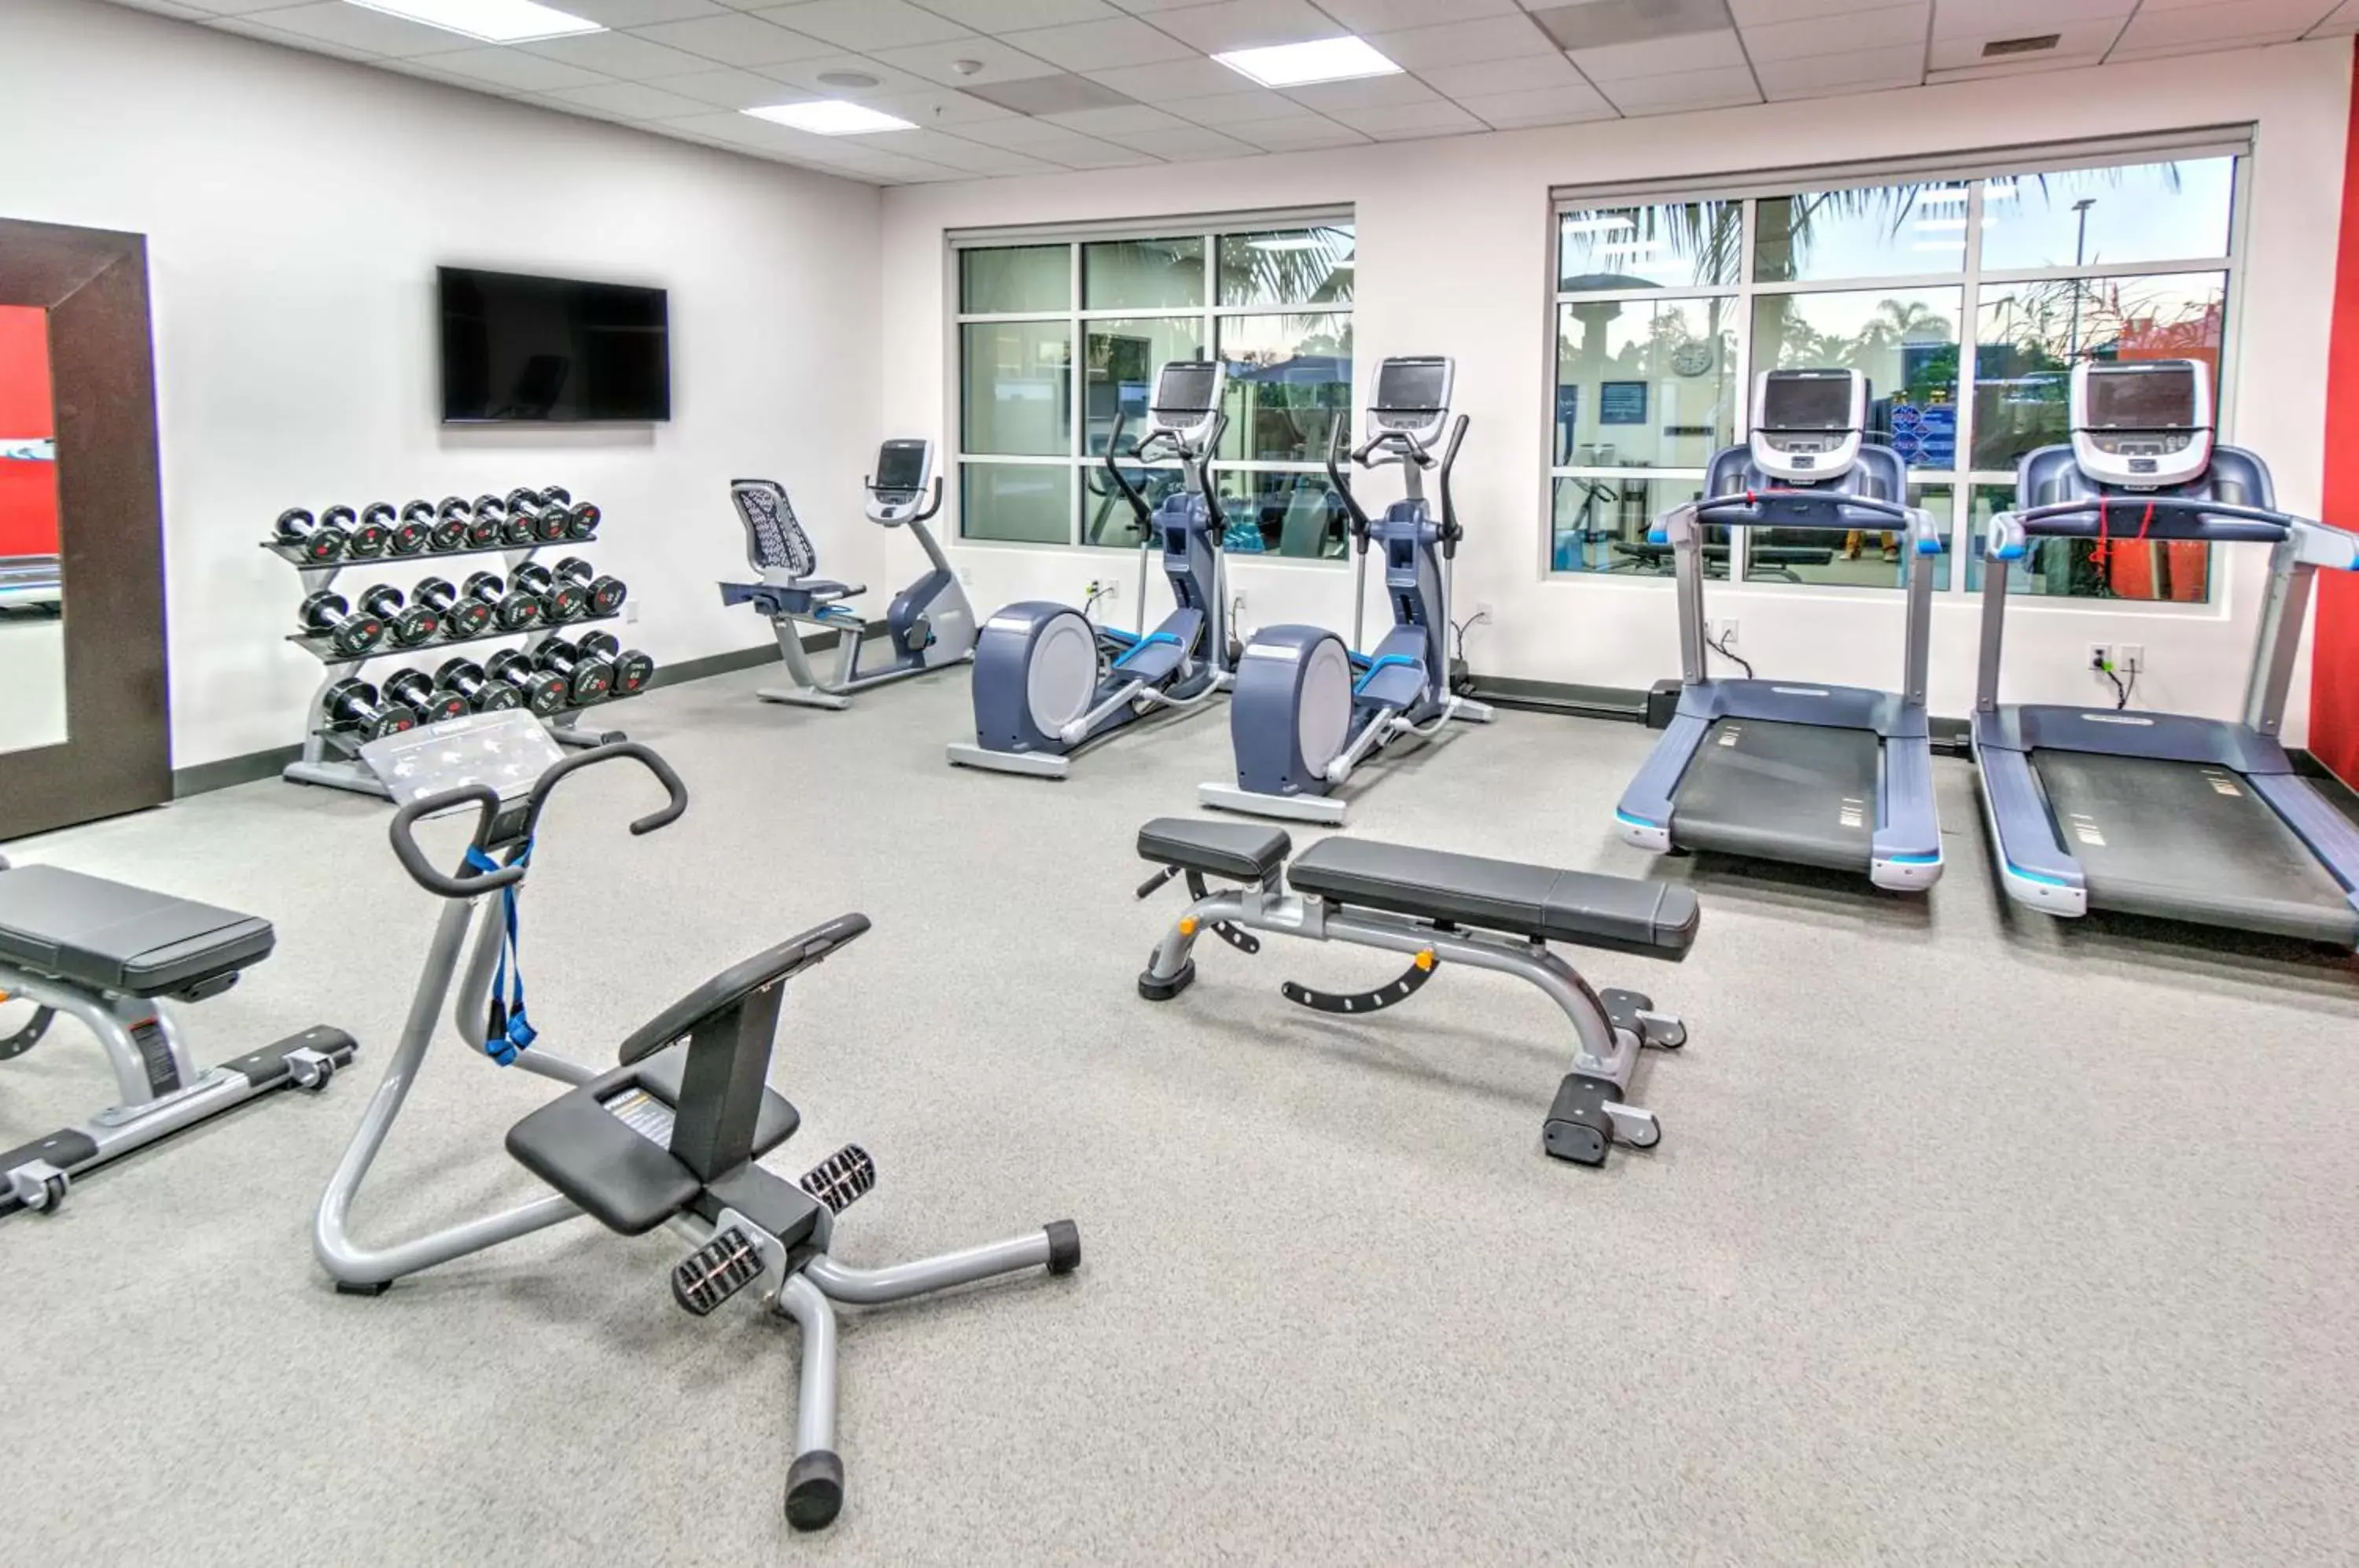 Fitness centre/facilities, Fitness Center/Facilities in Hilton Garden Inn Santa Barbara/Goleta